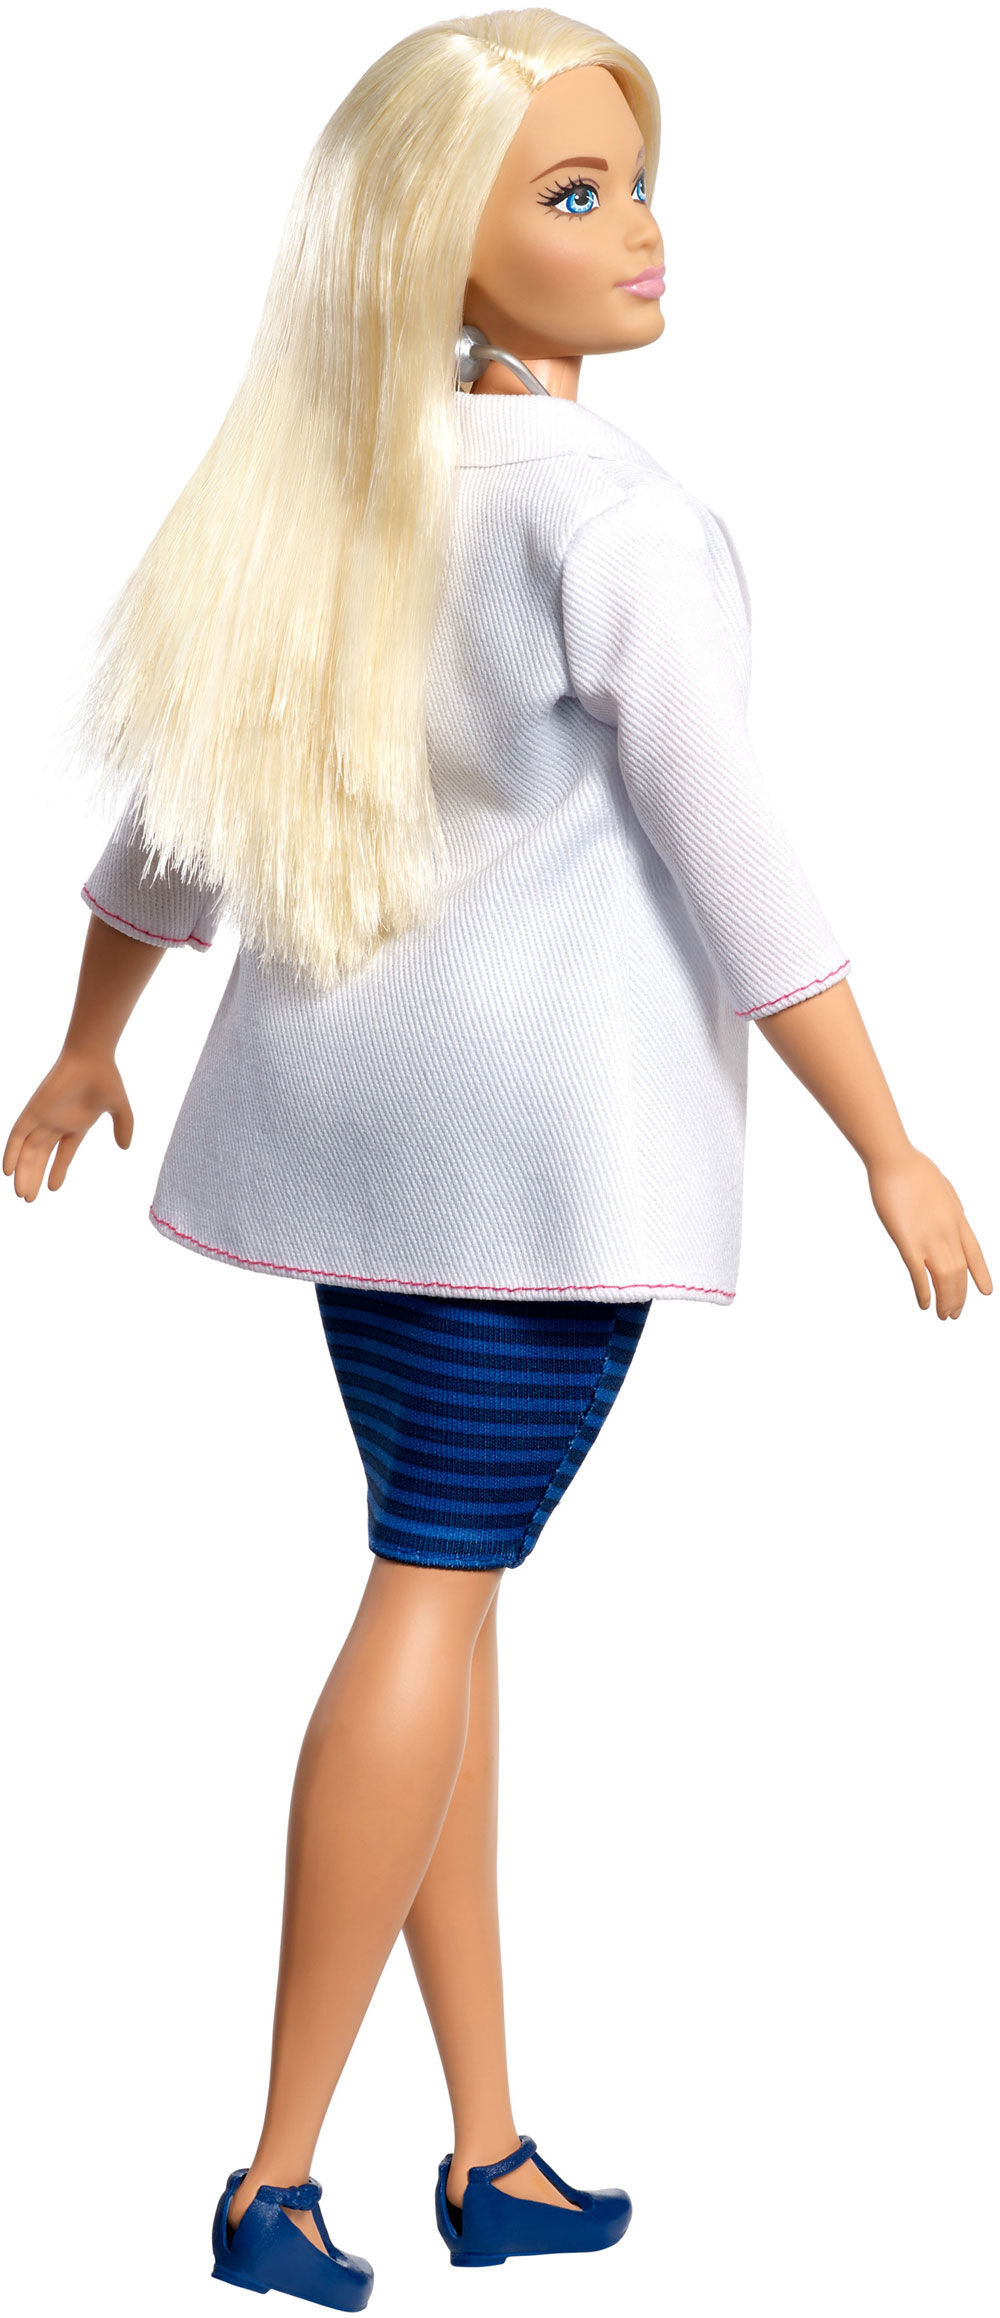 barbie doctor doll